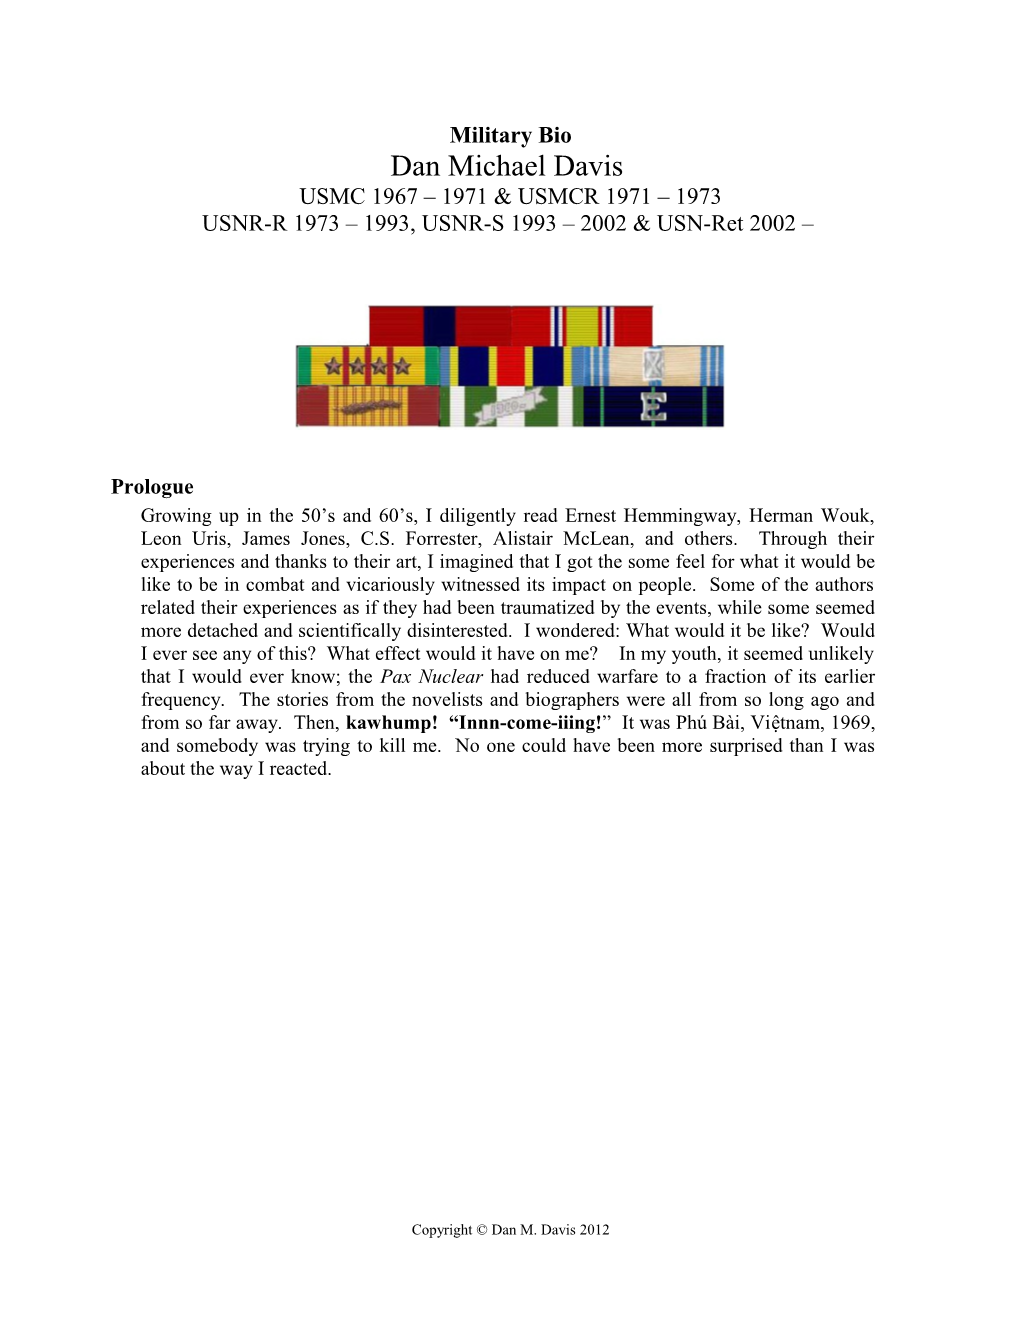 Dan Michael Davis Military Bio Outline